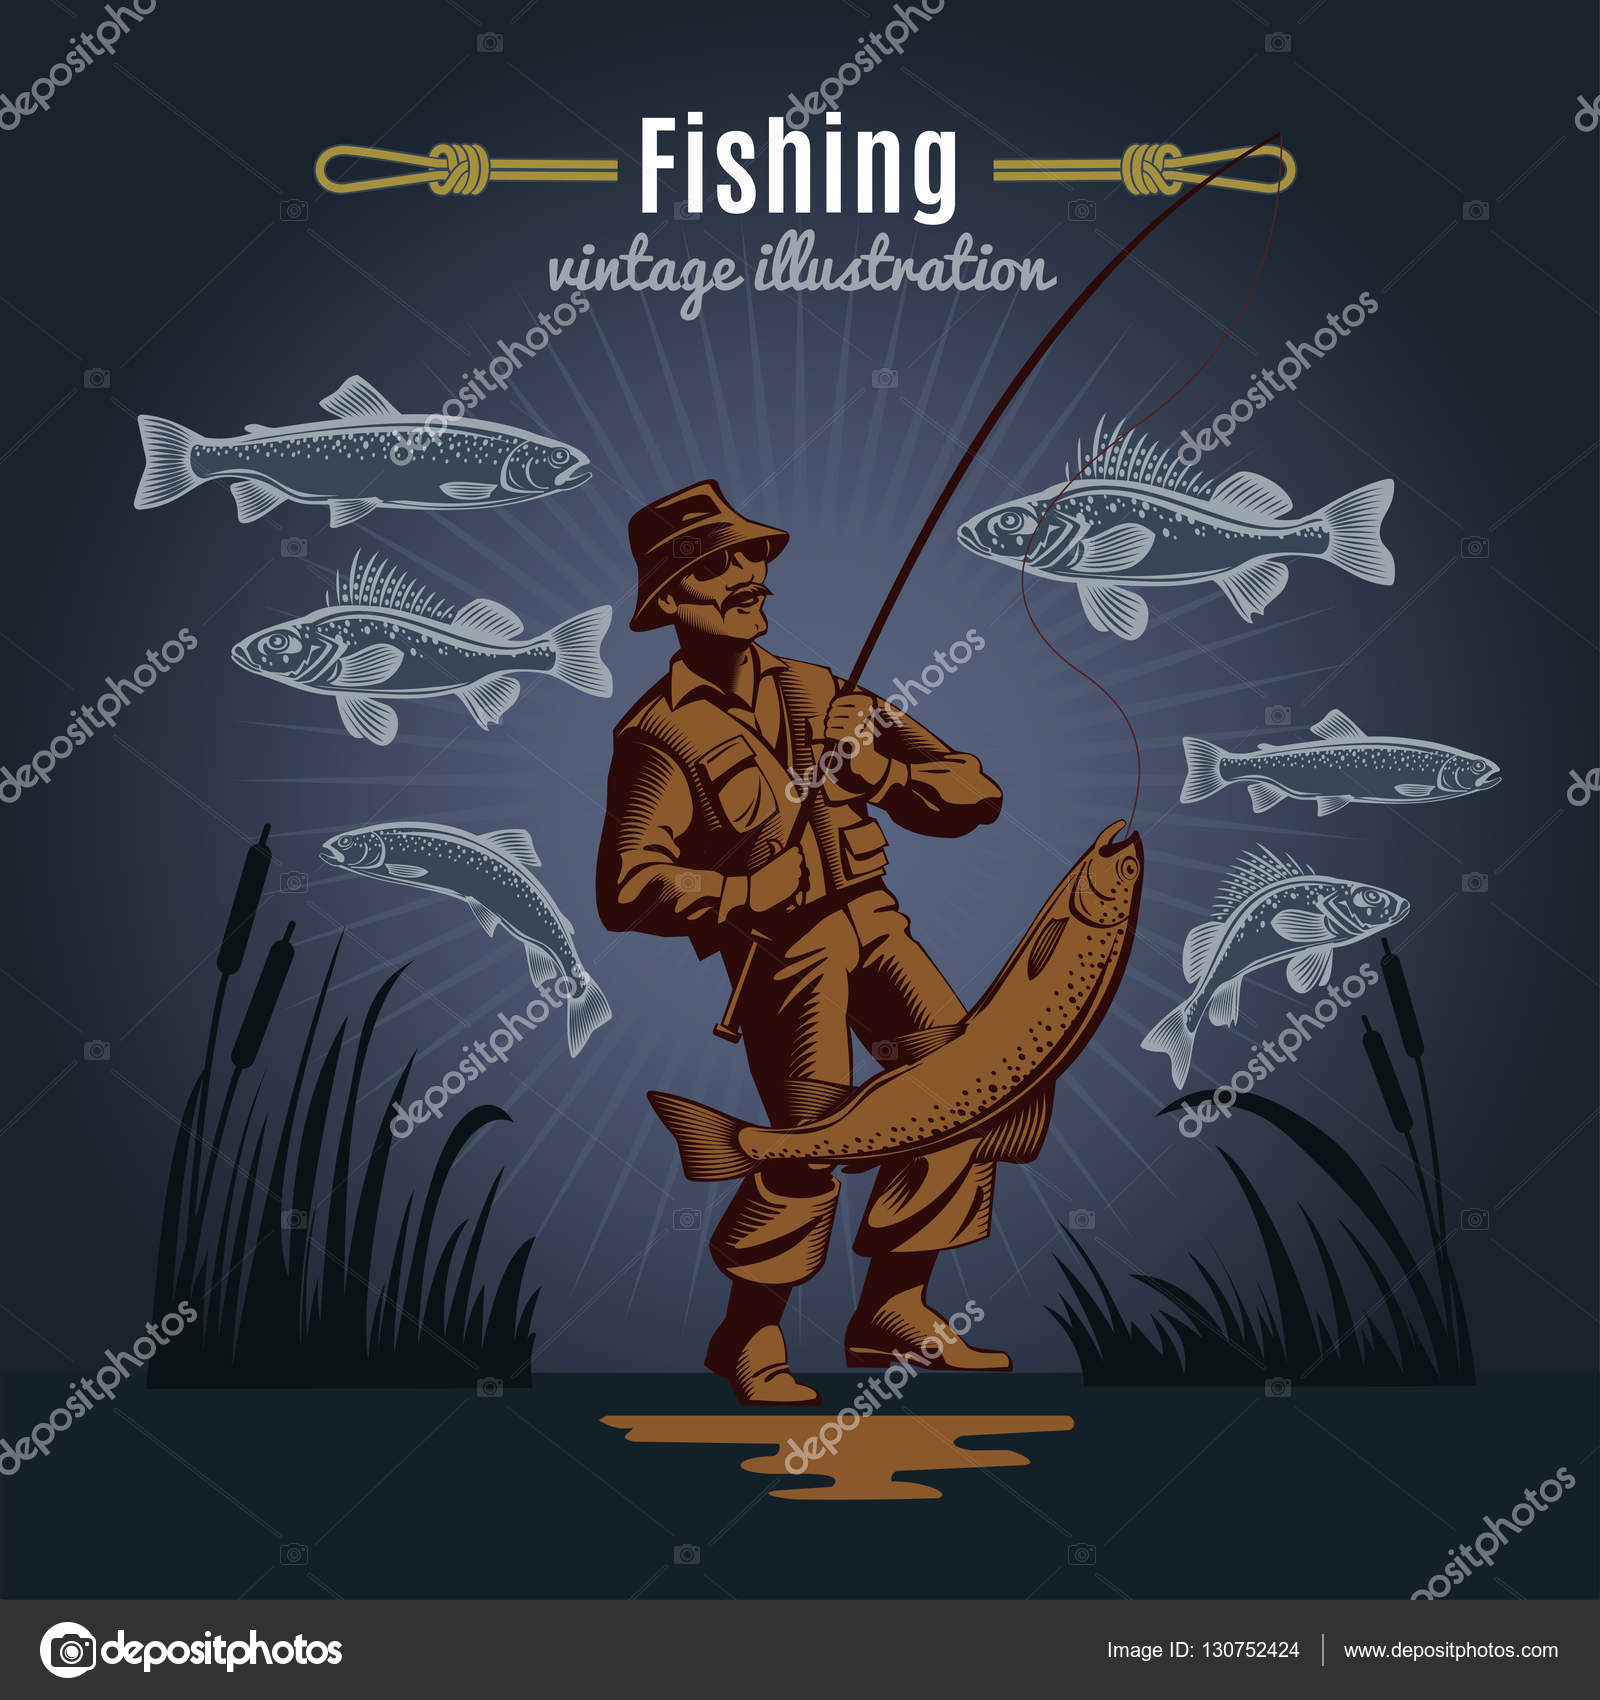 https://st3.depositphotos.com/2535571/13075/v/1600/depositphotos_130752424-stock-illustration-fishing-gear-vintage-background.jpg